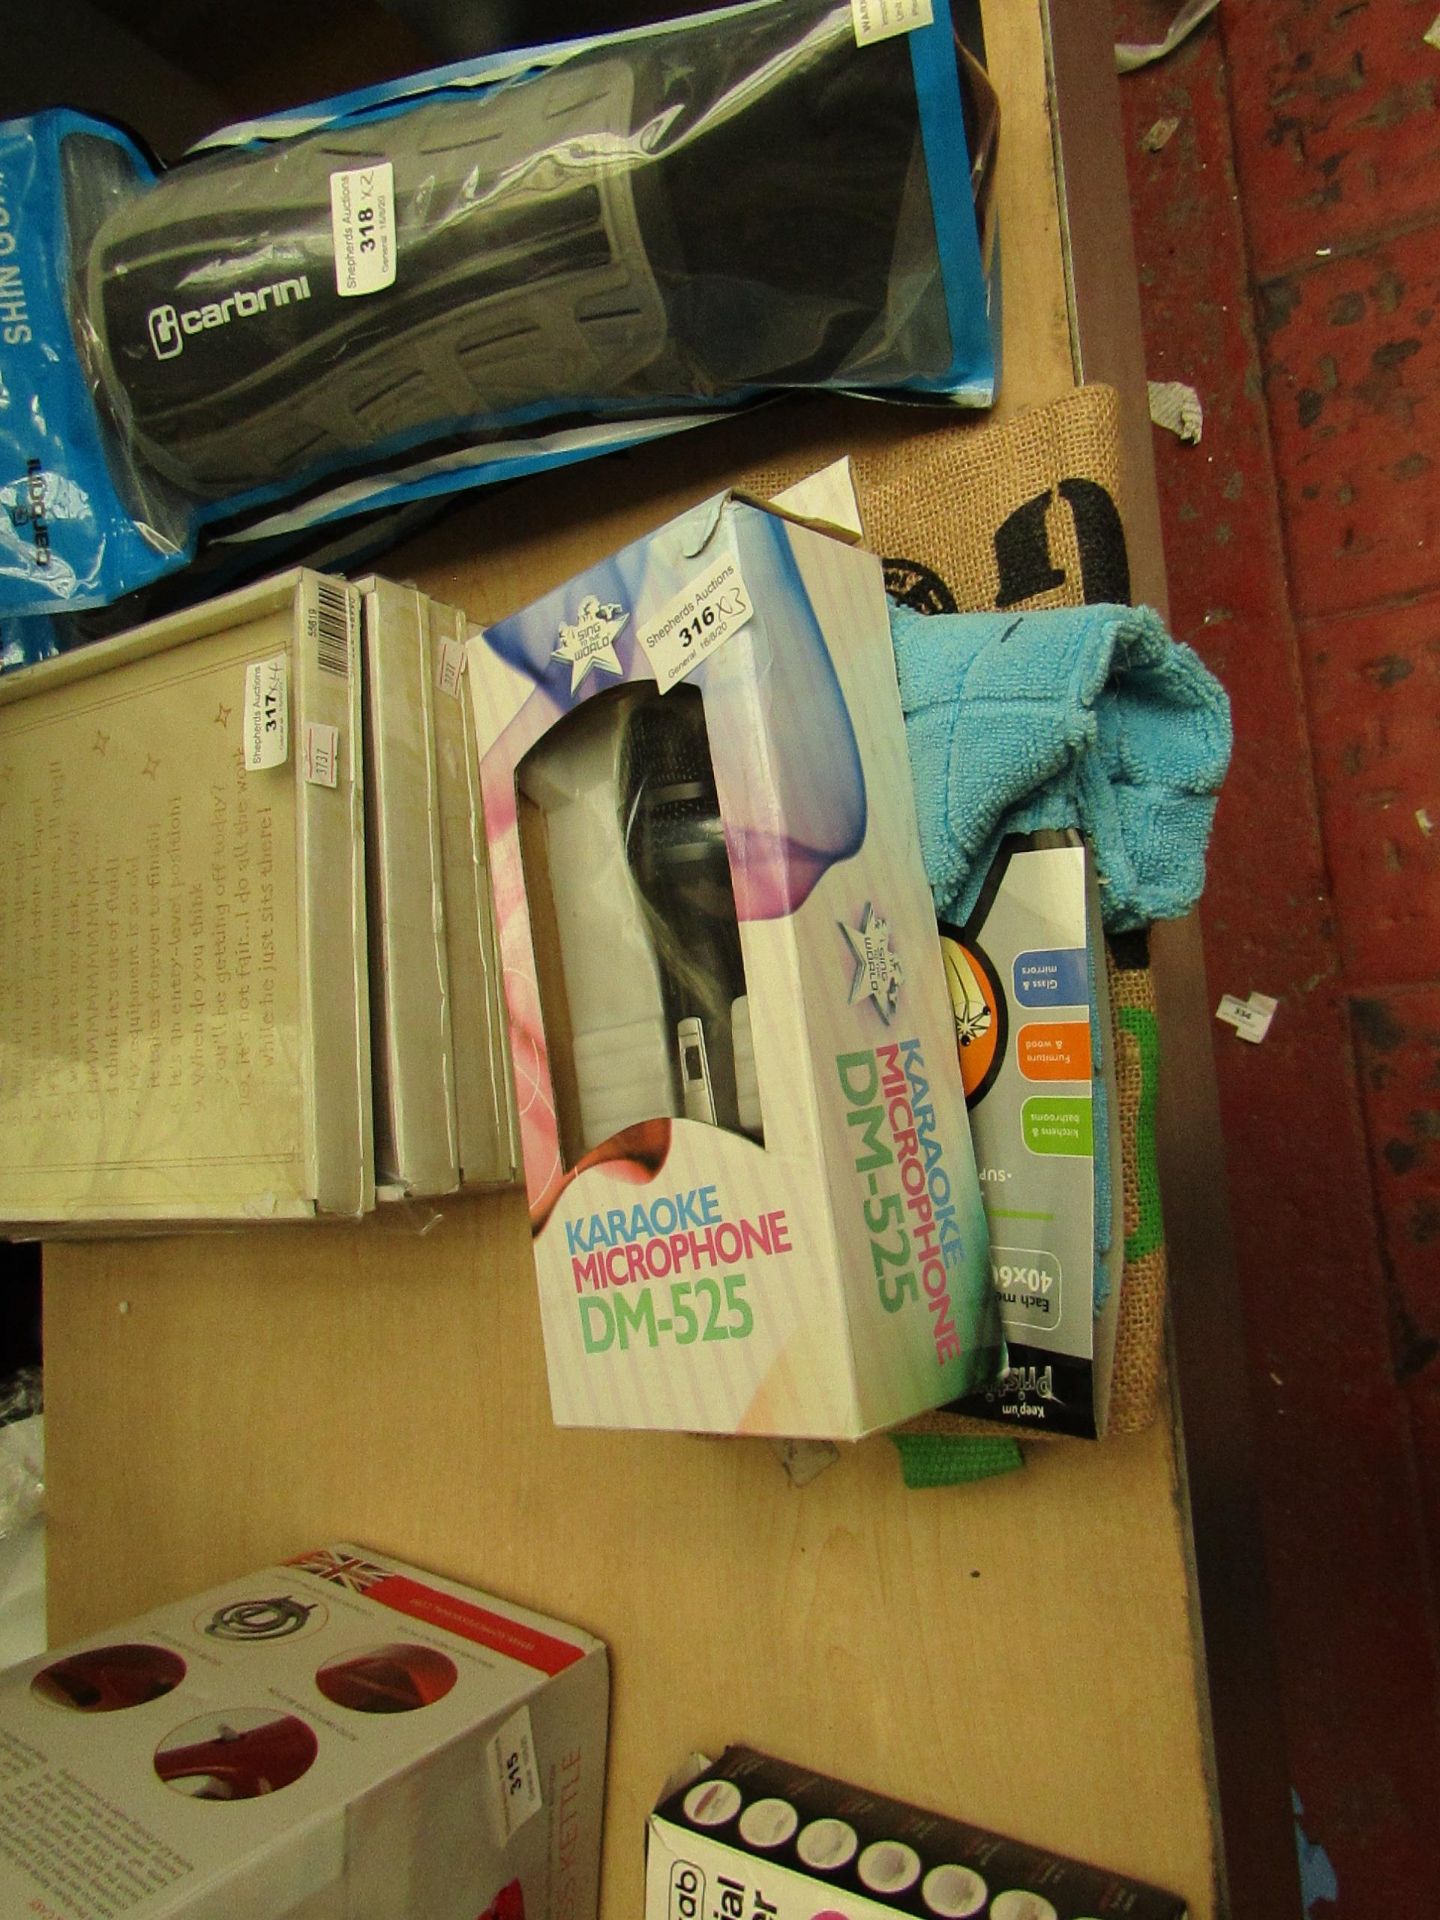 3 Items Being a Karaoke Microphone DM-525, A Cleaning Cloth & an Organic Shopping Bag.